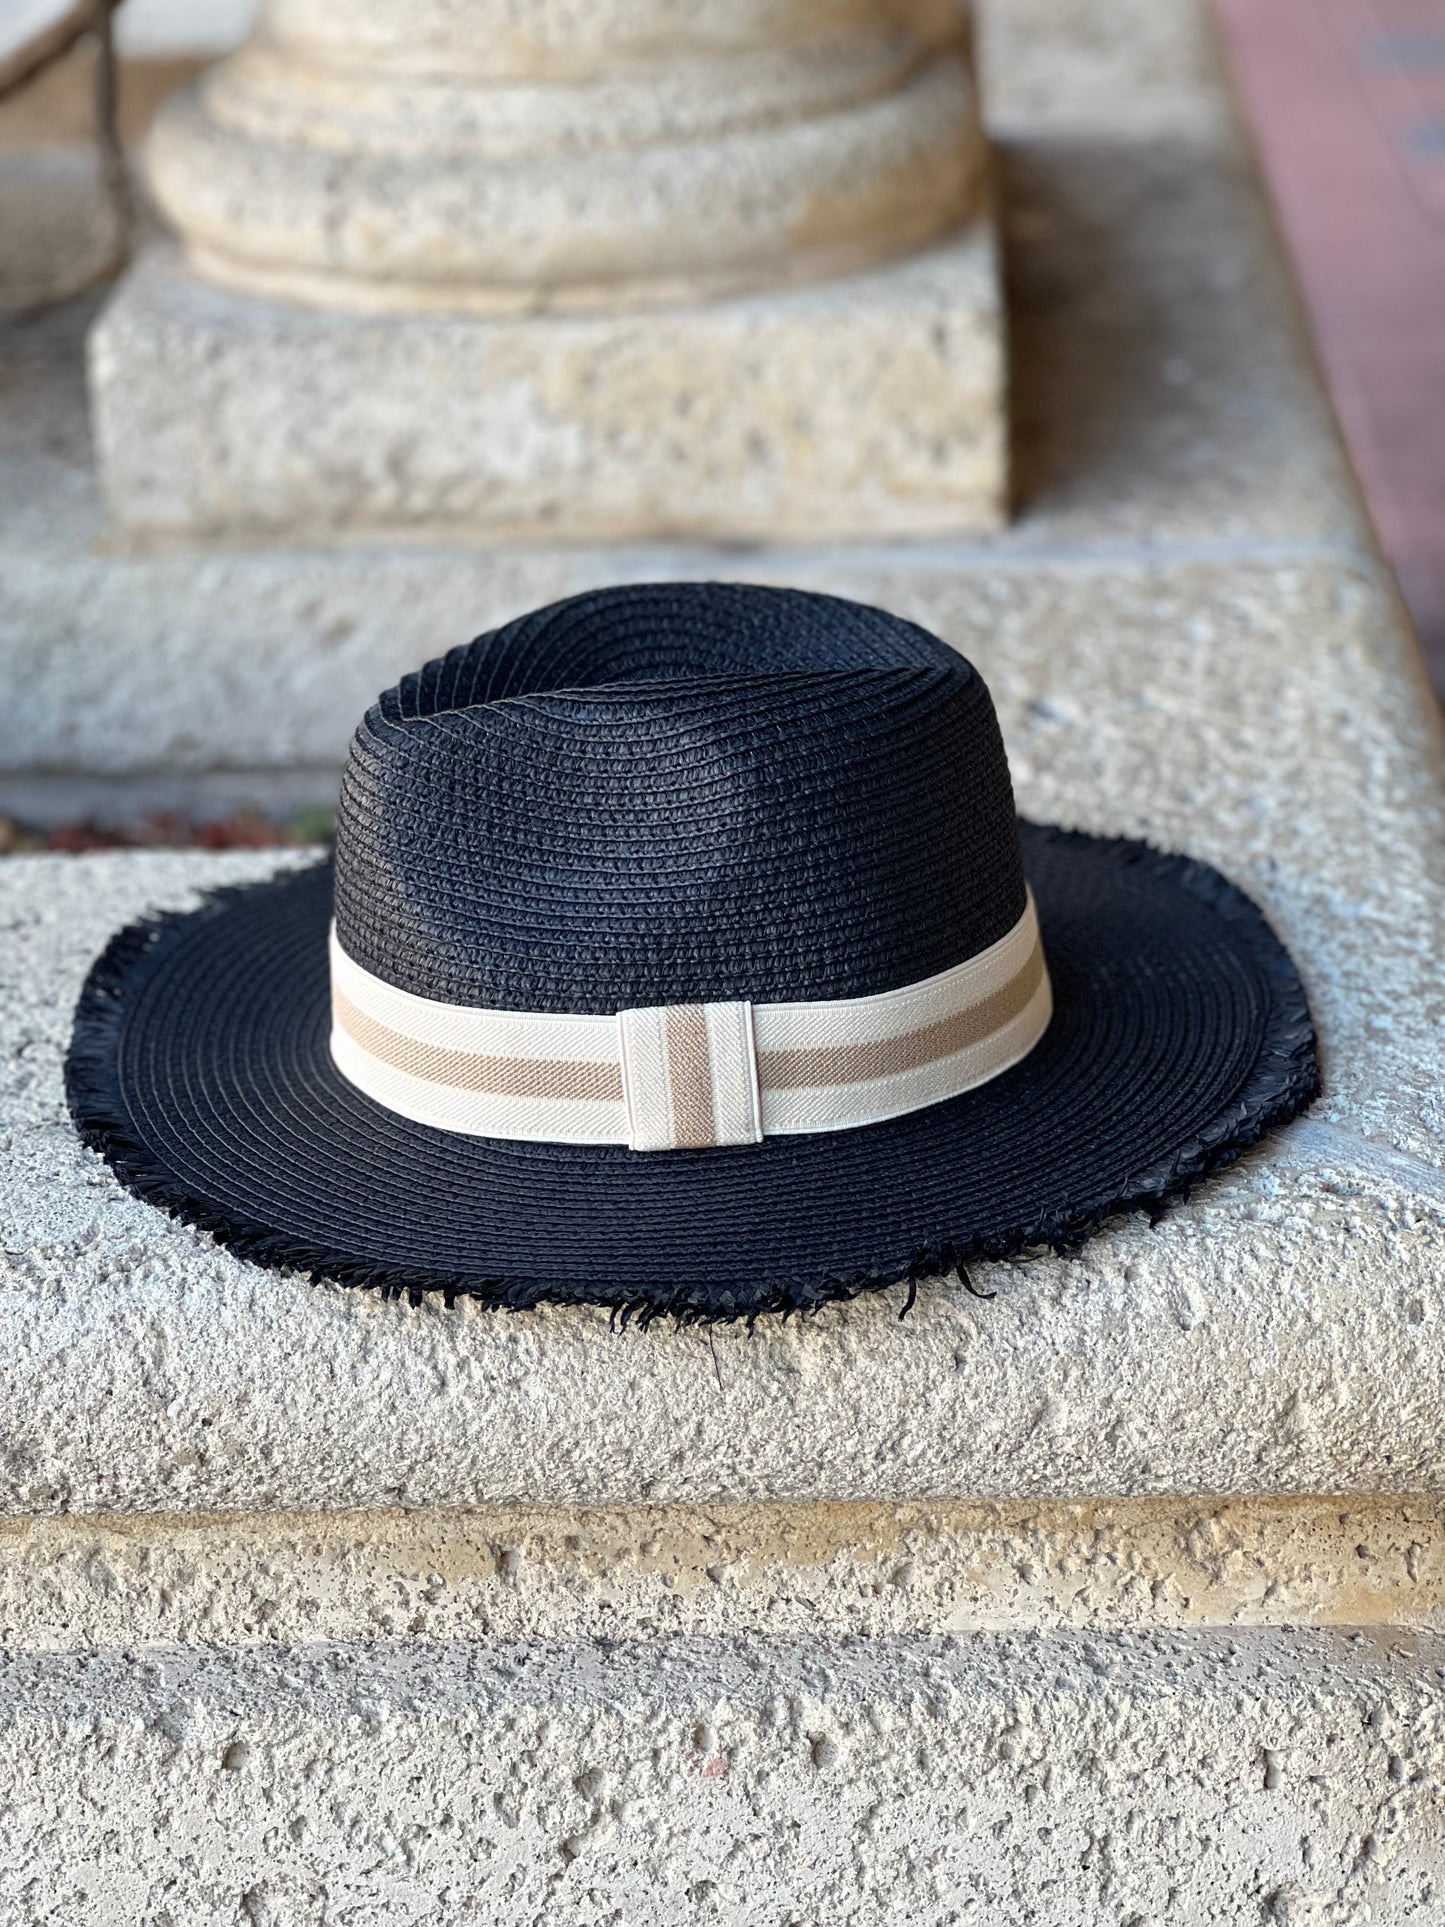 Fashion Hat / Black Fringe / Beige and Taupe